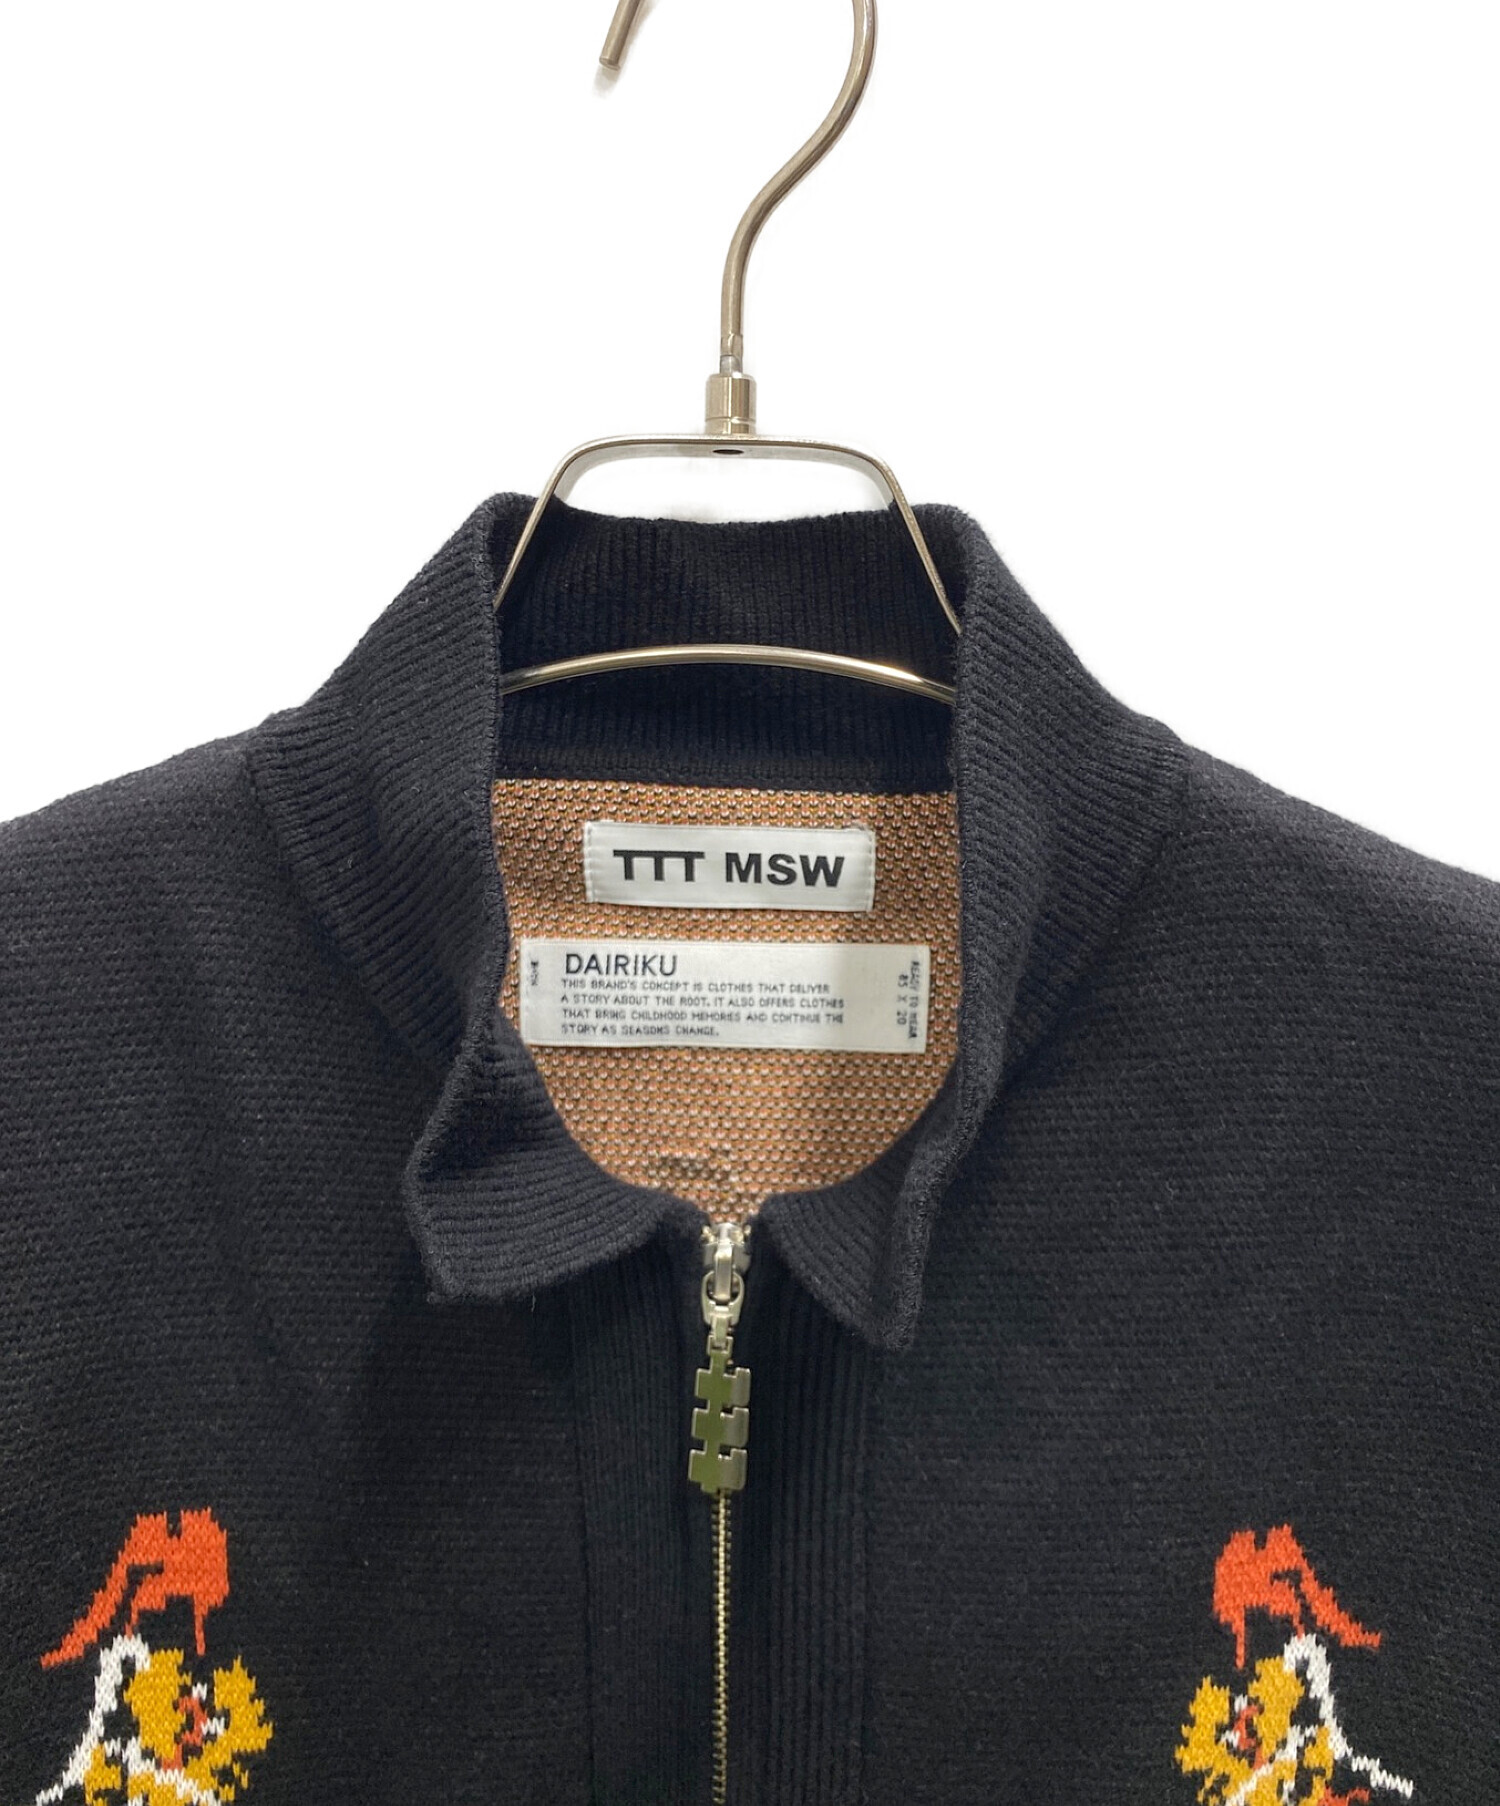 TTT MSW (ティーモダンストリートウェア) DAIRIKU (ダイリク) Ska Zip up Knit Polo ブラック サイズ:XL